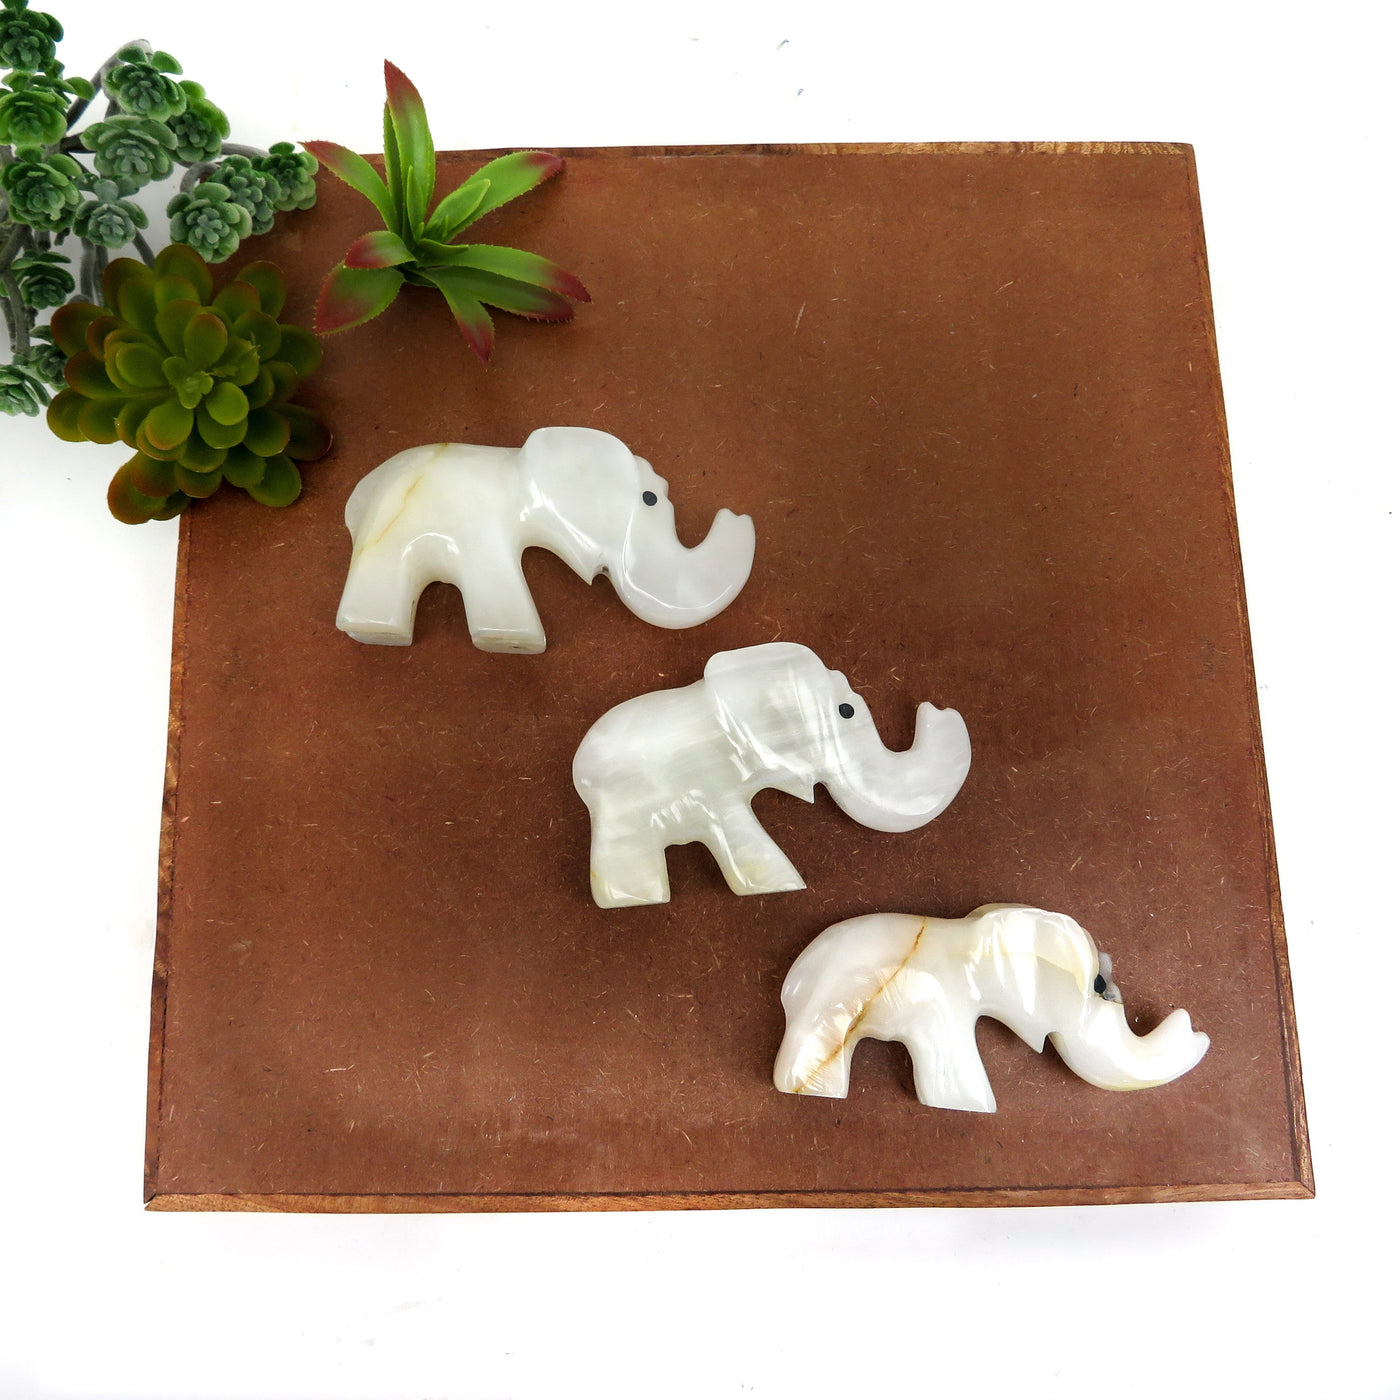 3 Light Onyx Elephant Shape Stones on brown background